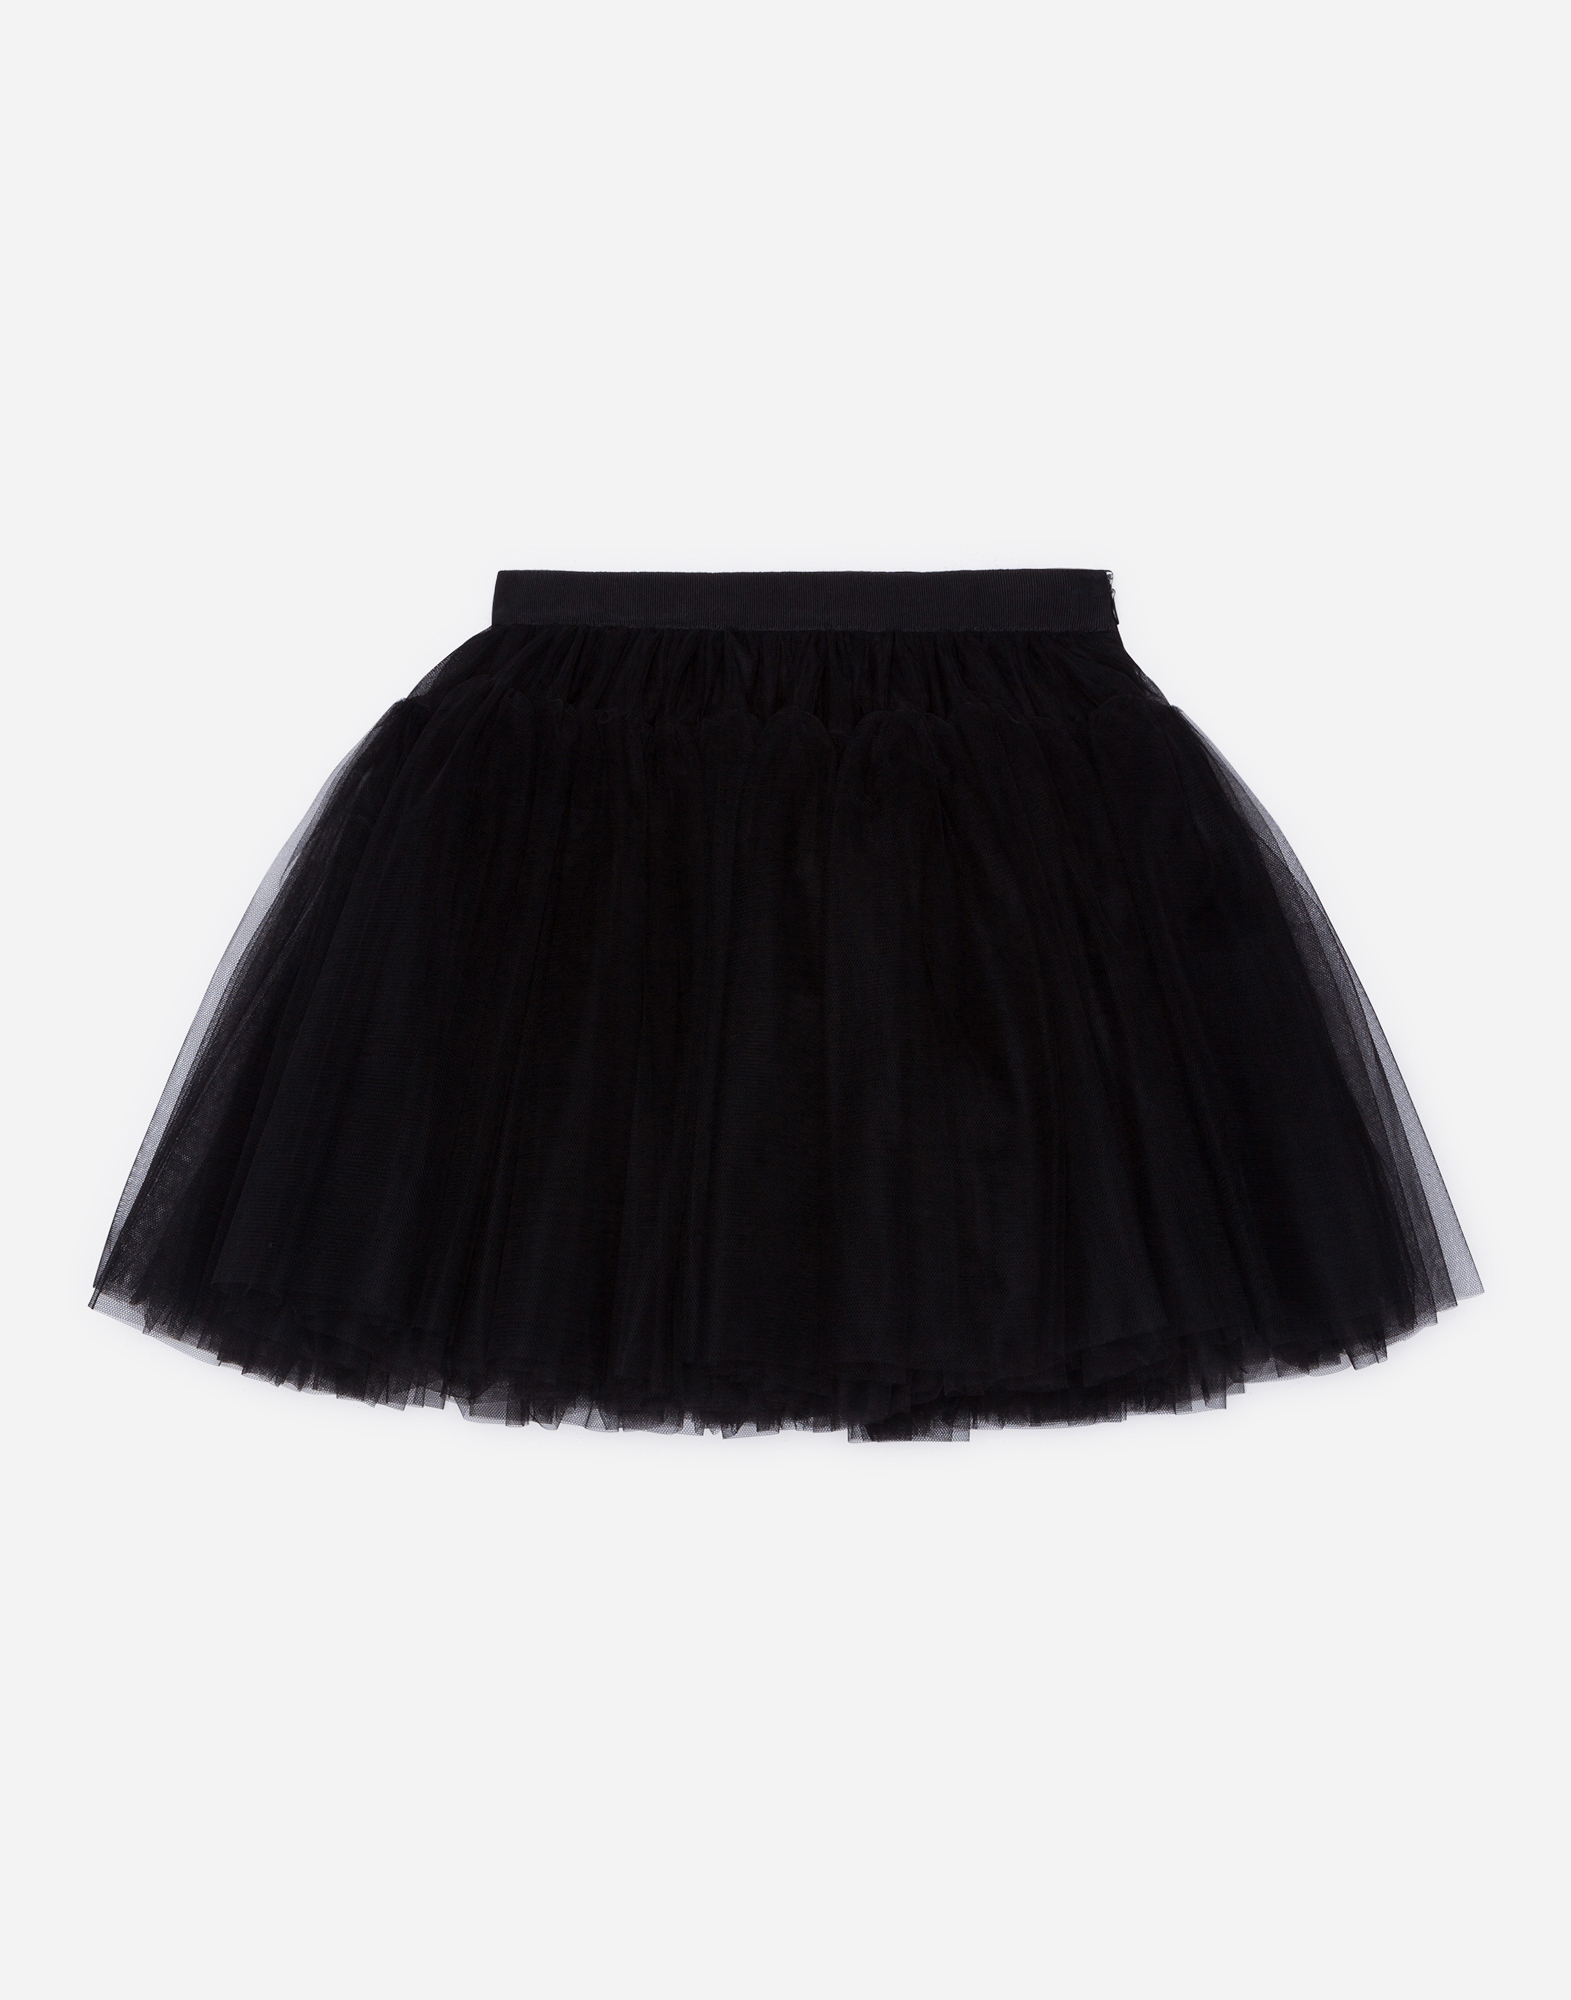 Multi-layered tulle skirt in Black